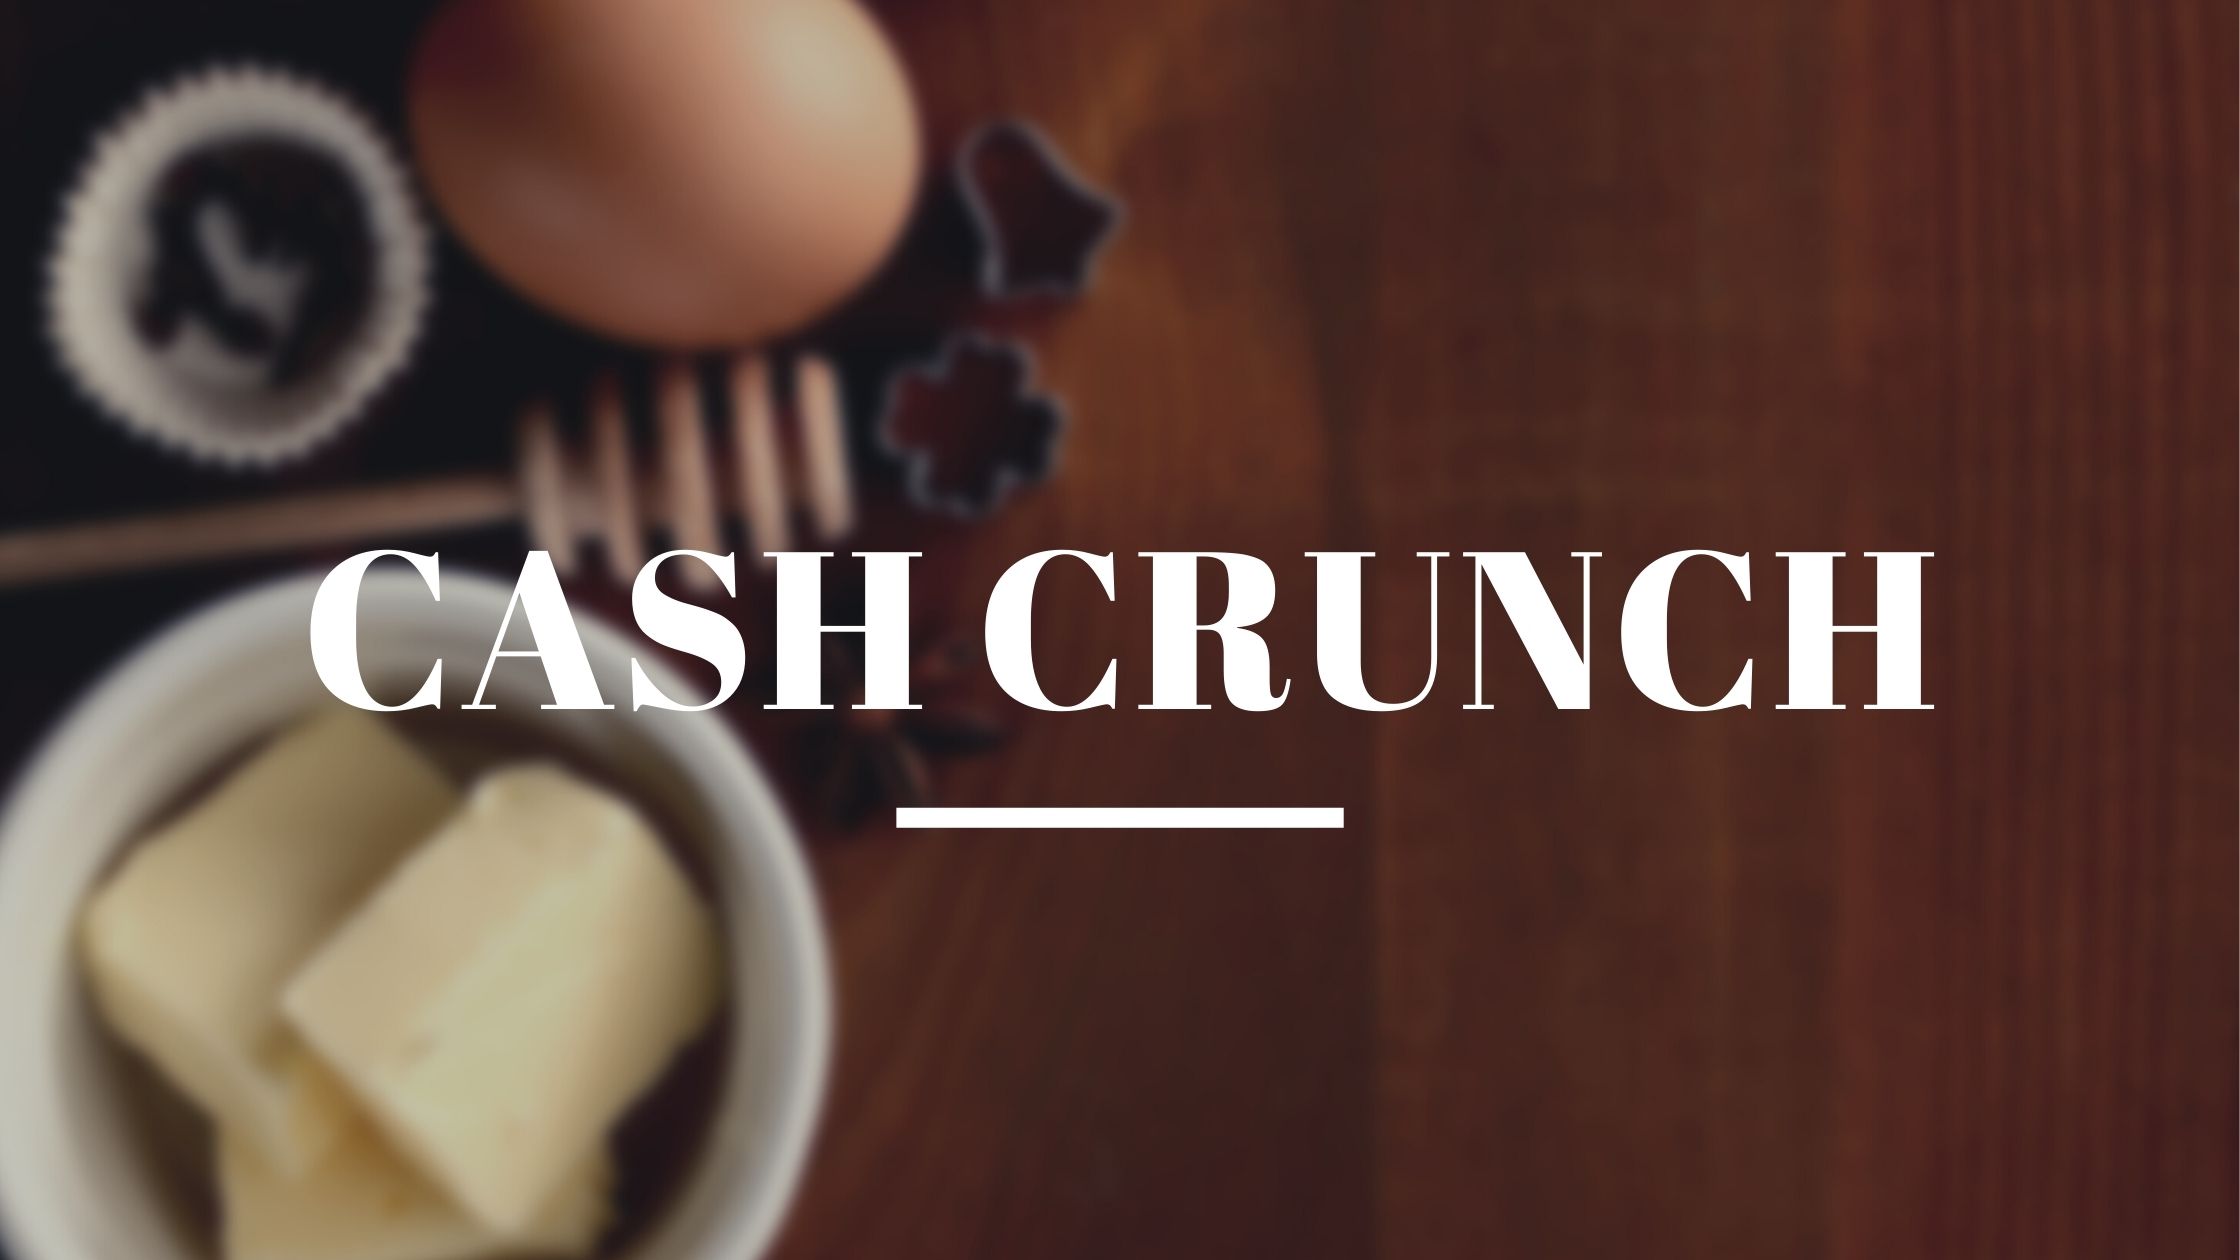 Cash crunch